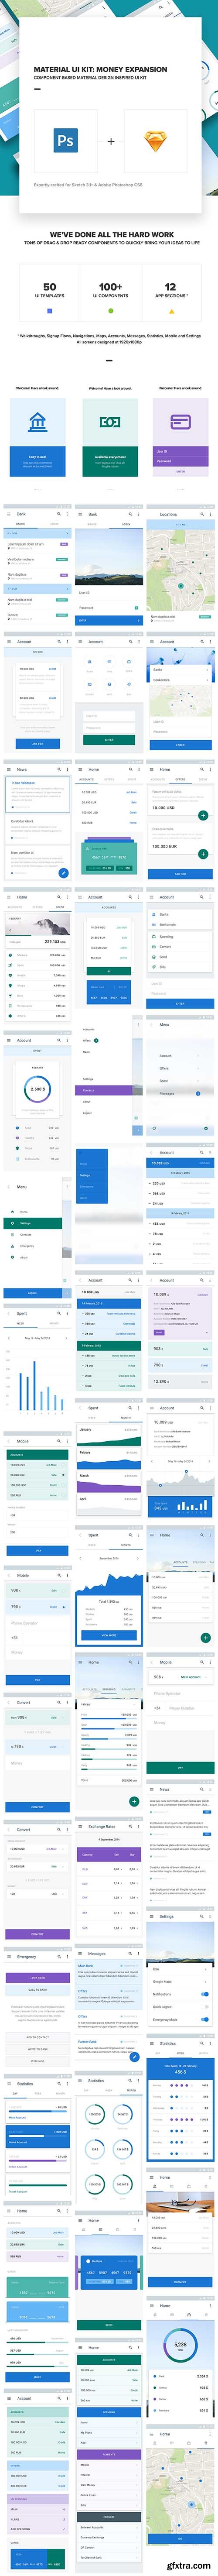 Material UI Kit Money - Material Design for banking apps